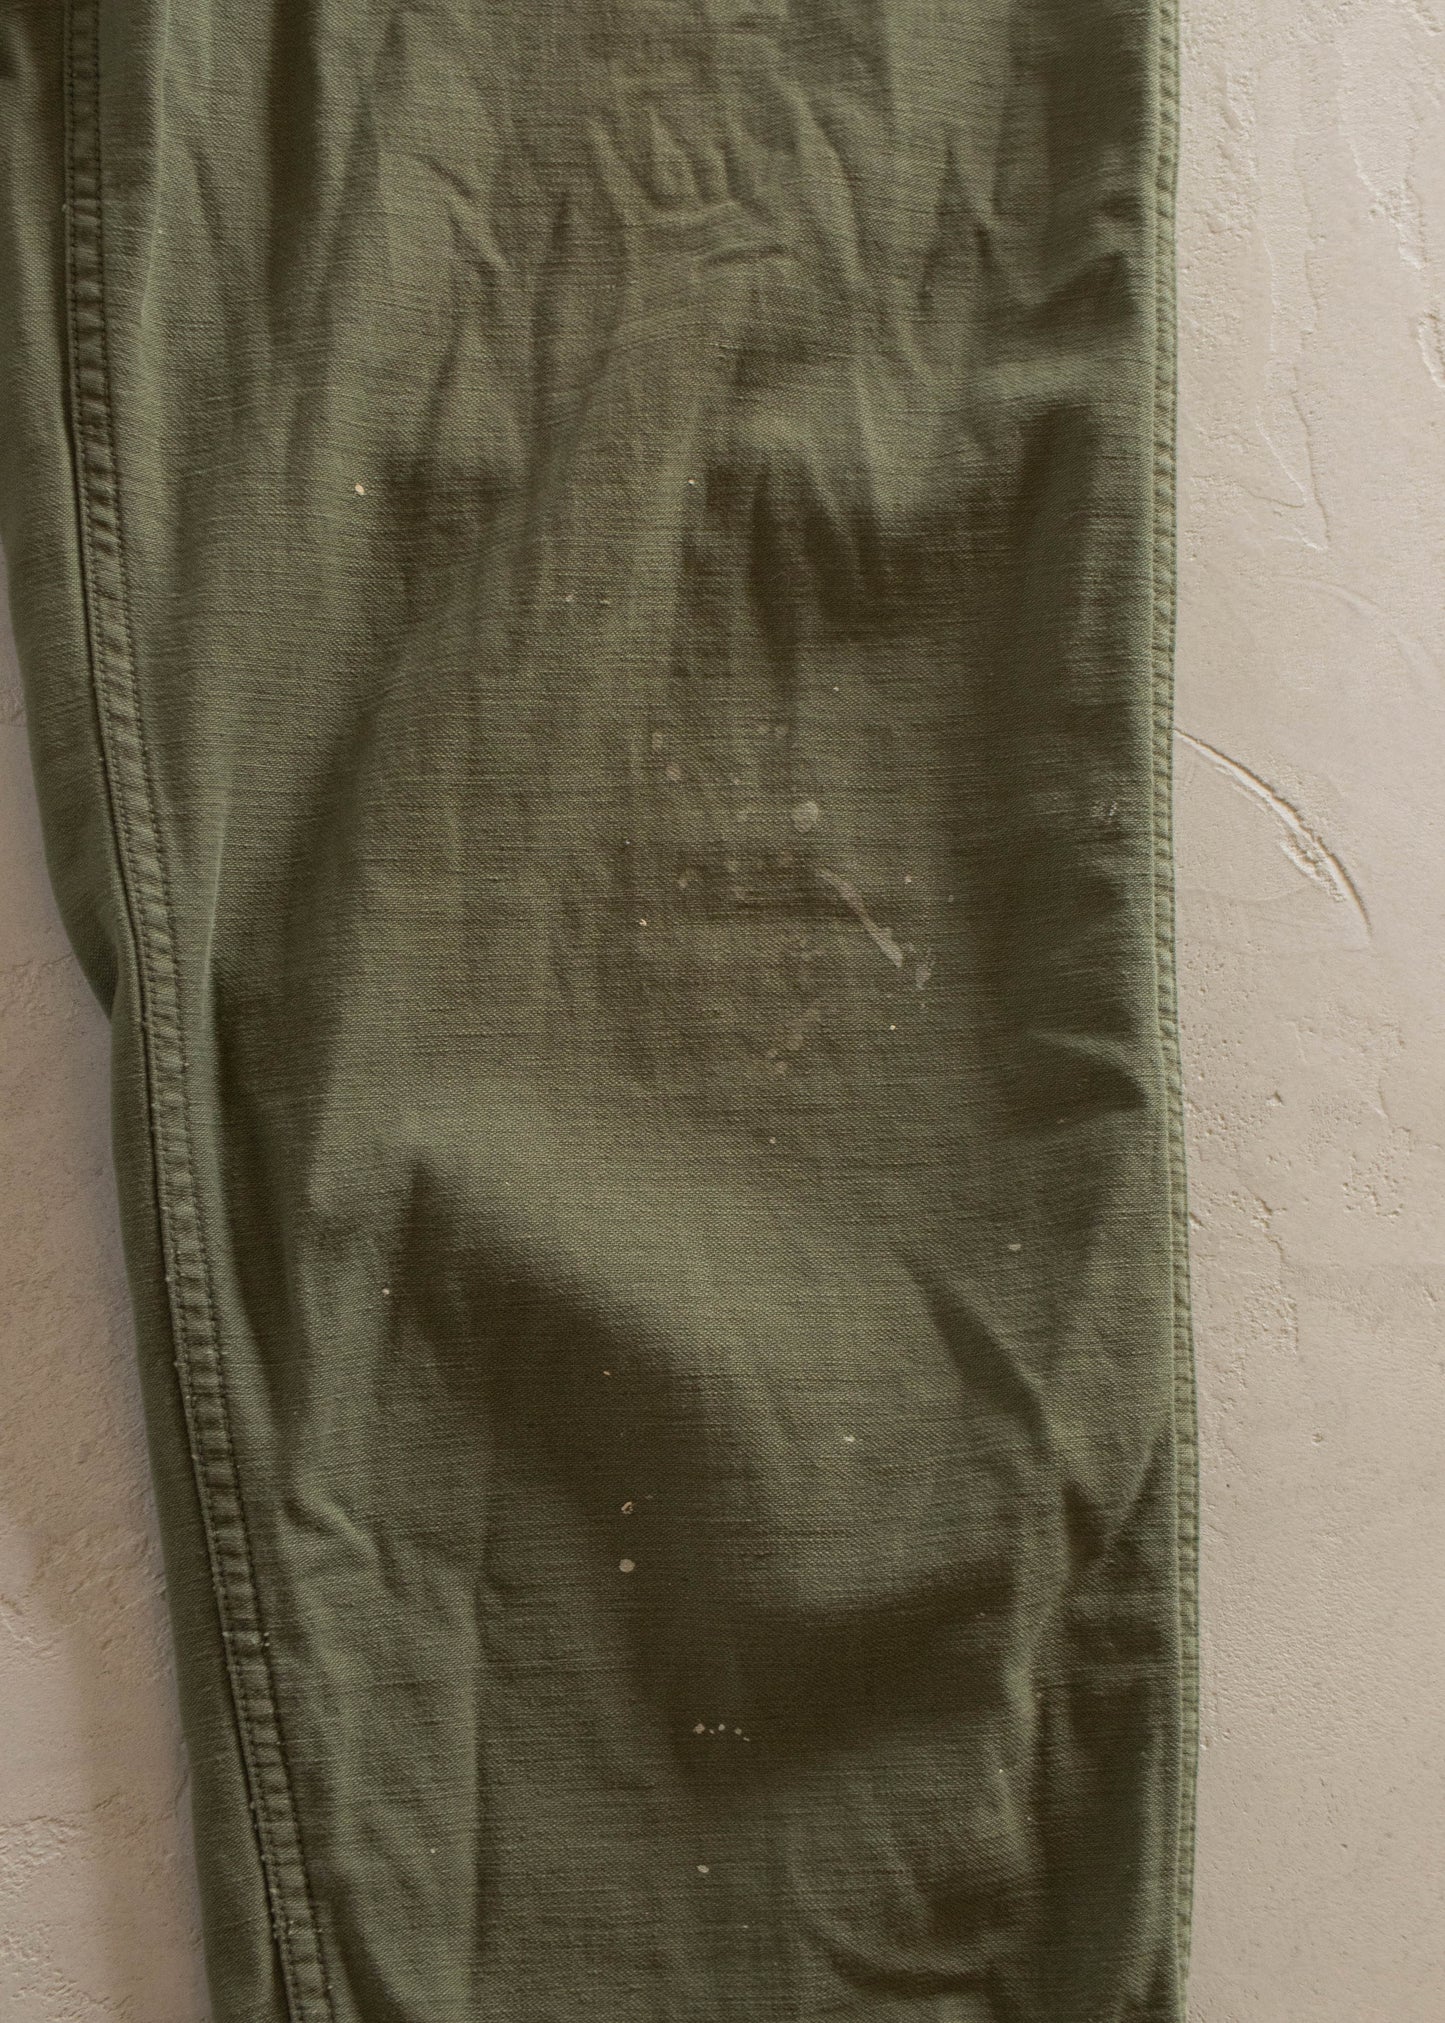 1970s OG 107 Type I Fatigue Pants Size Women's 29 Men's 32